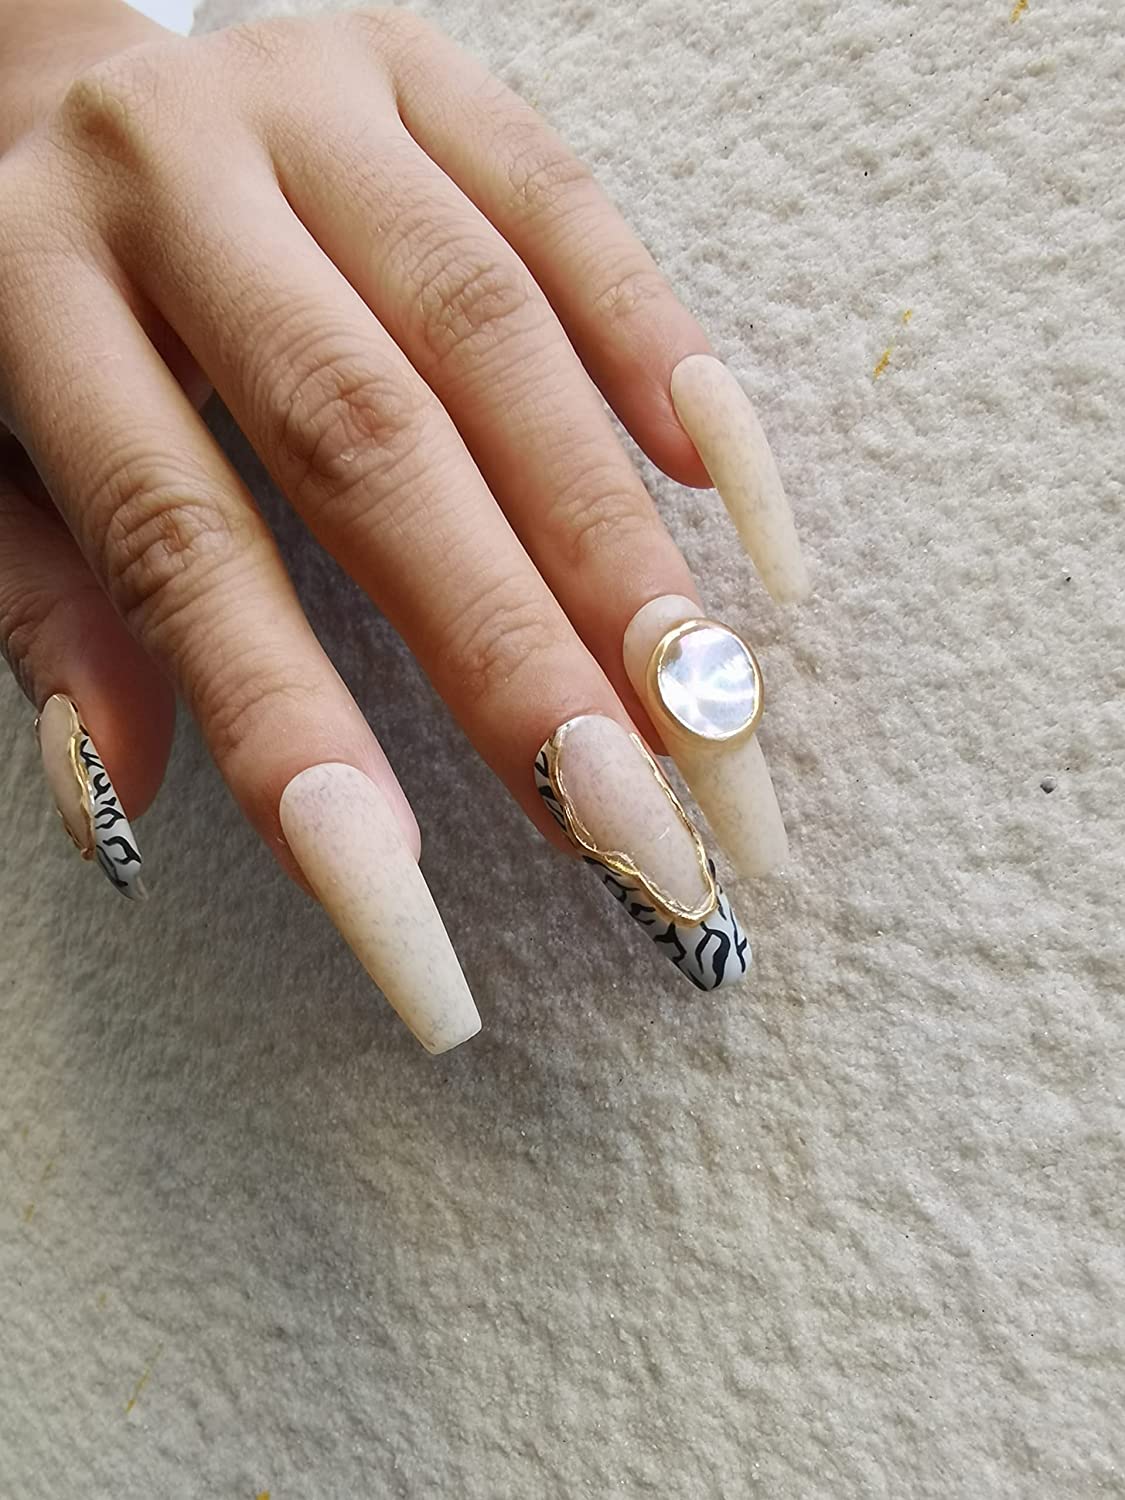 designer nail foil